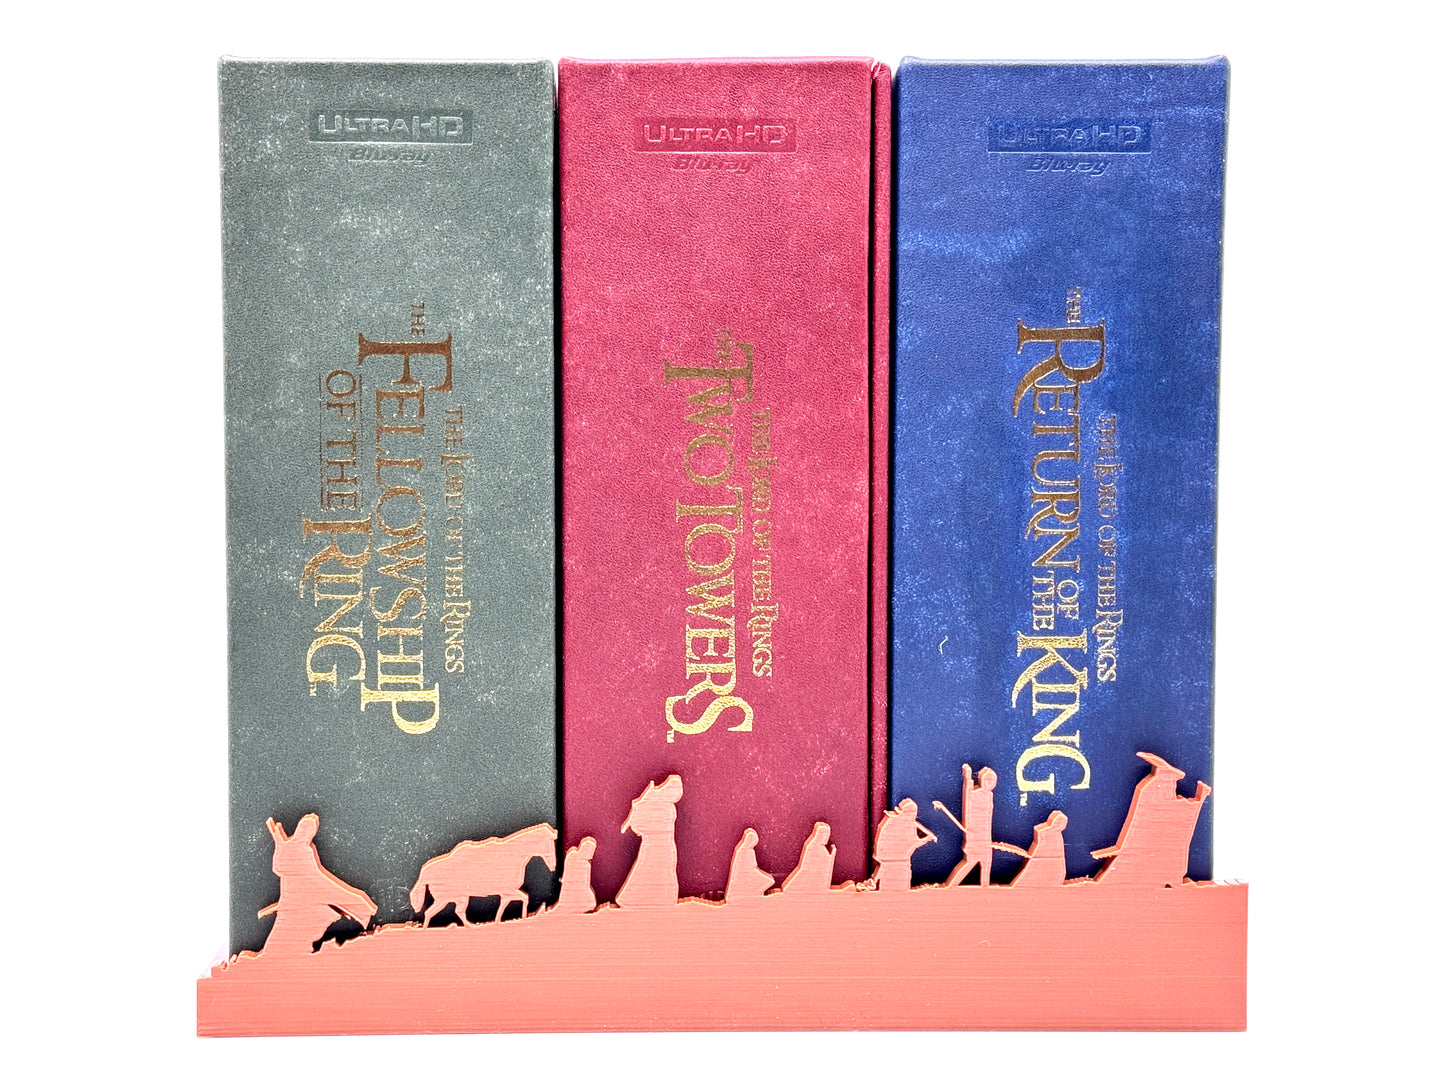 Lord of the Rings HDzeta Trilogy Box Set Display Shelf